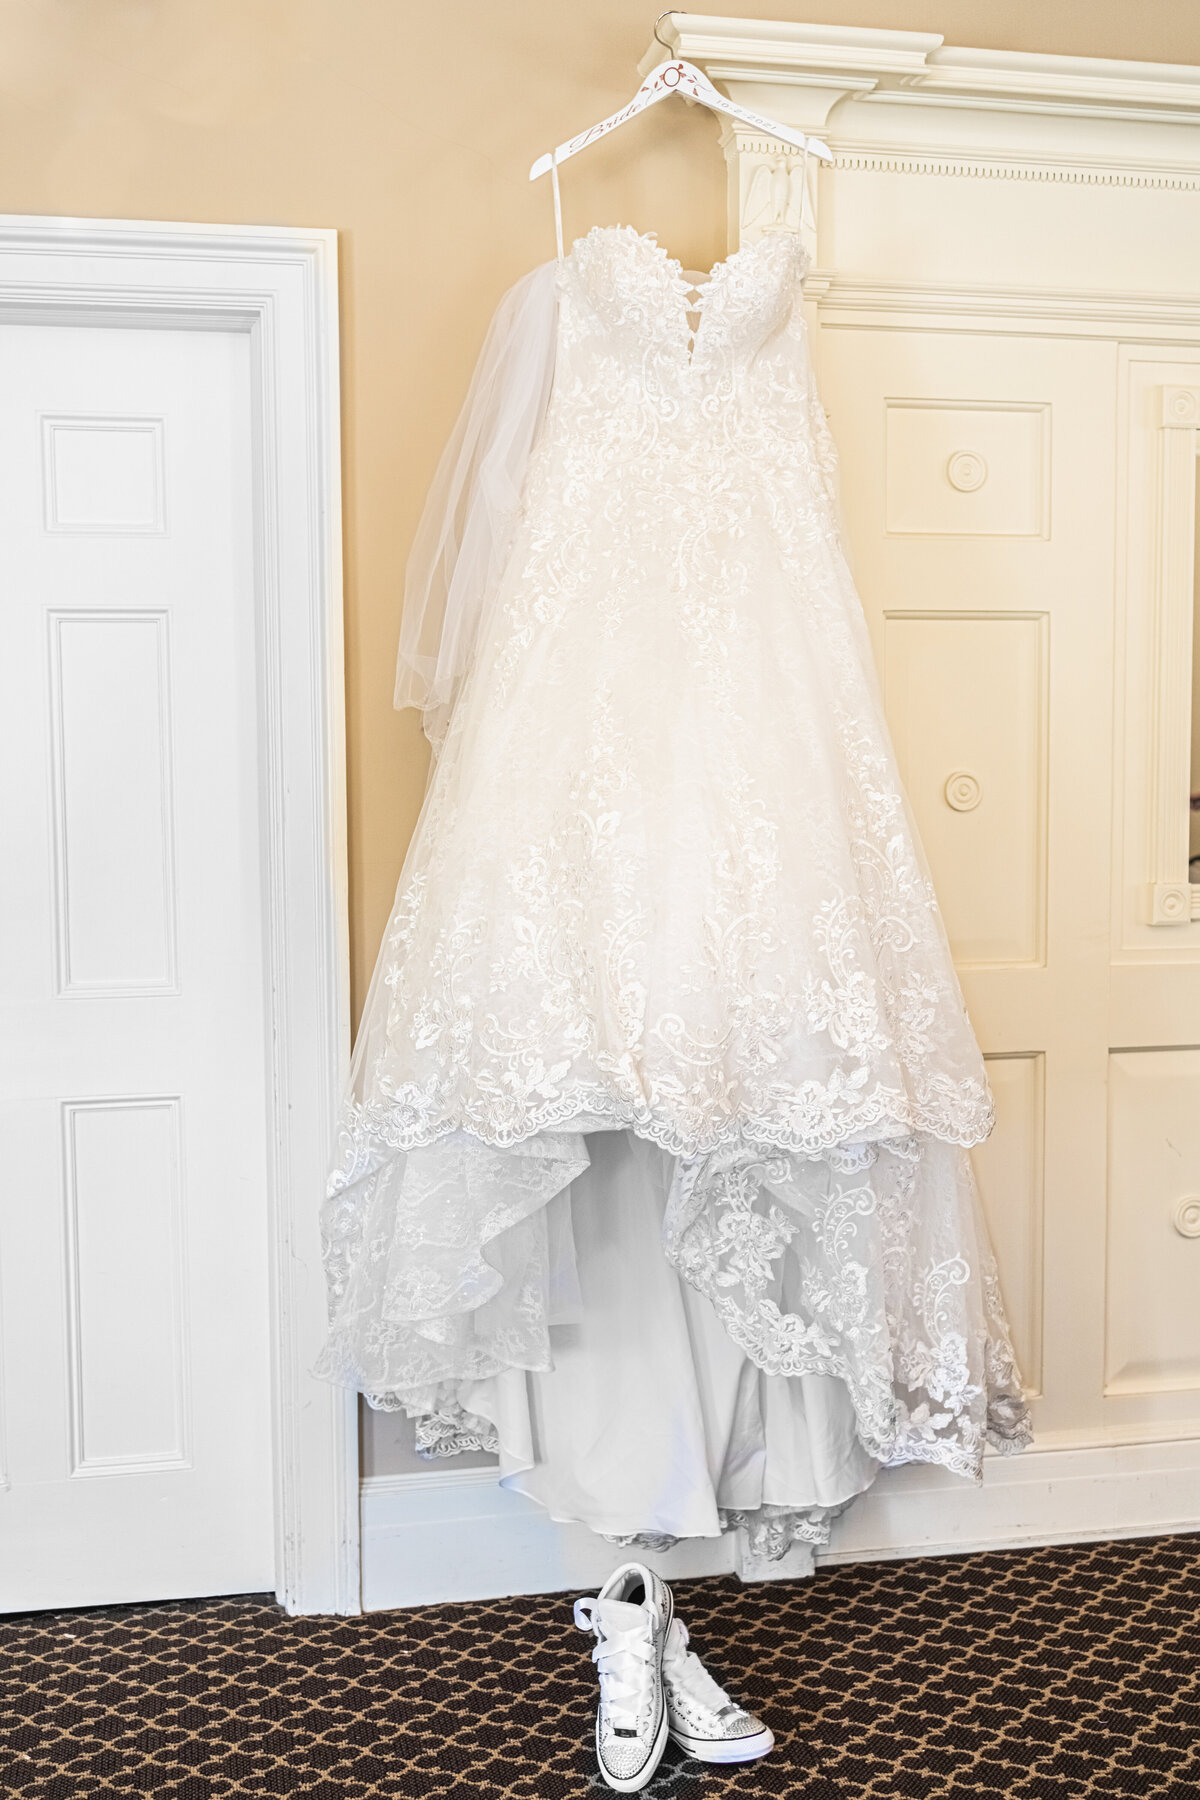 Classic white wedding dress, a photo by 4Karma Studio in San Francisco